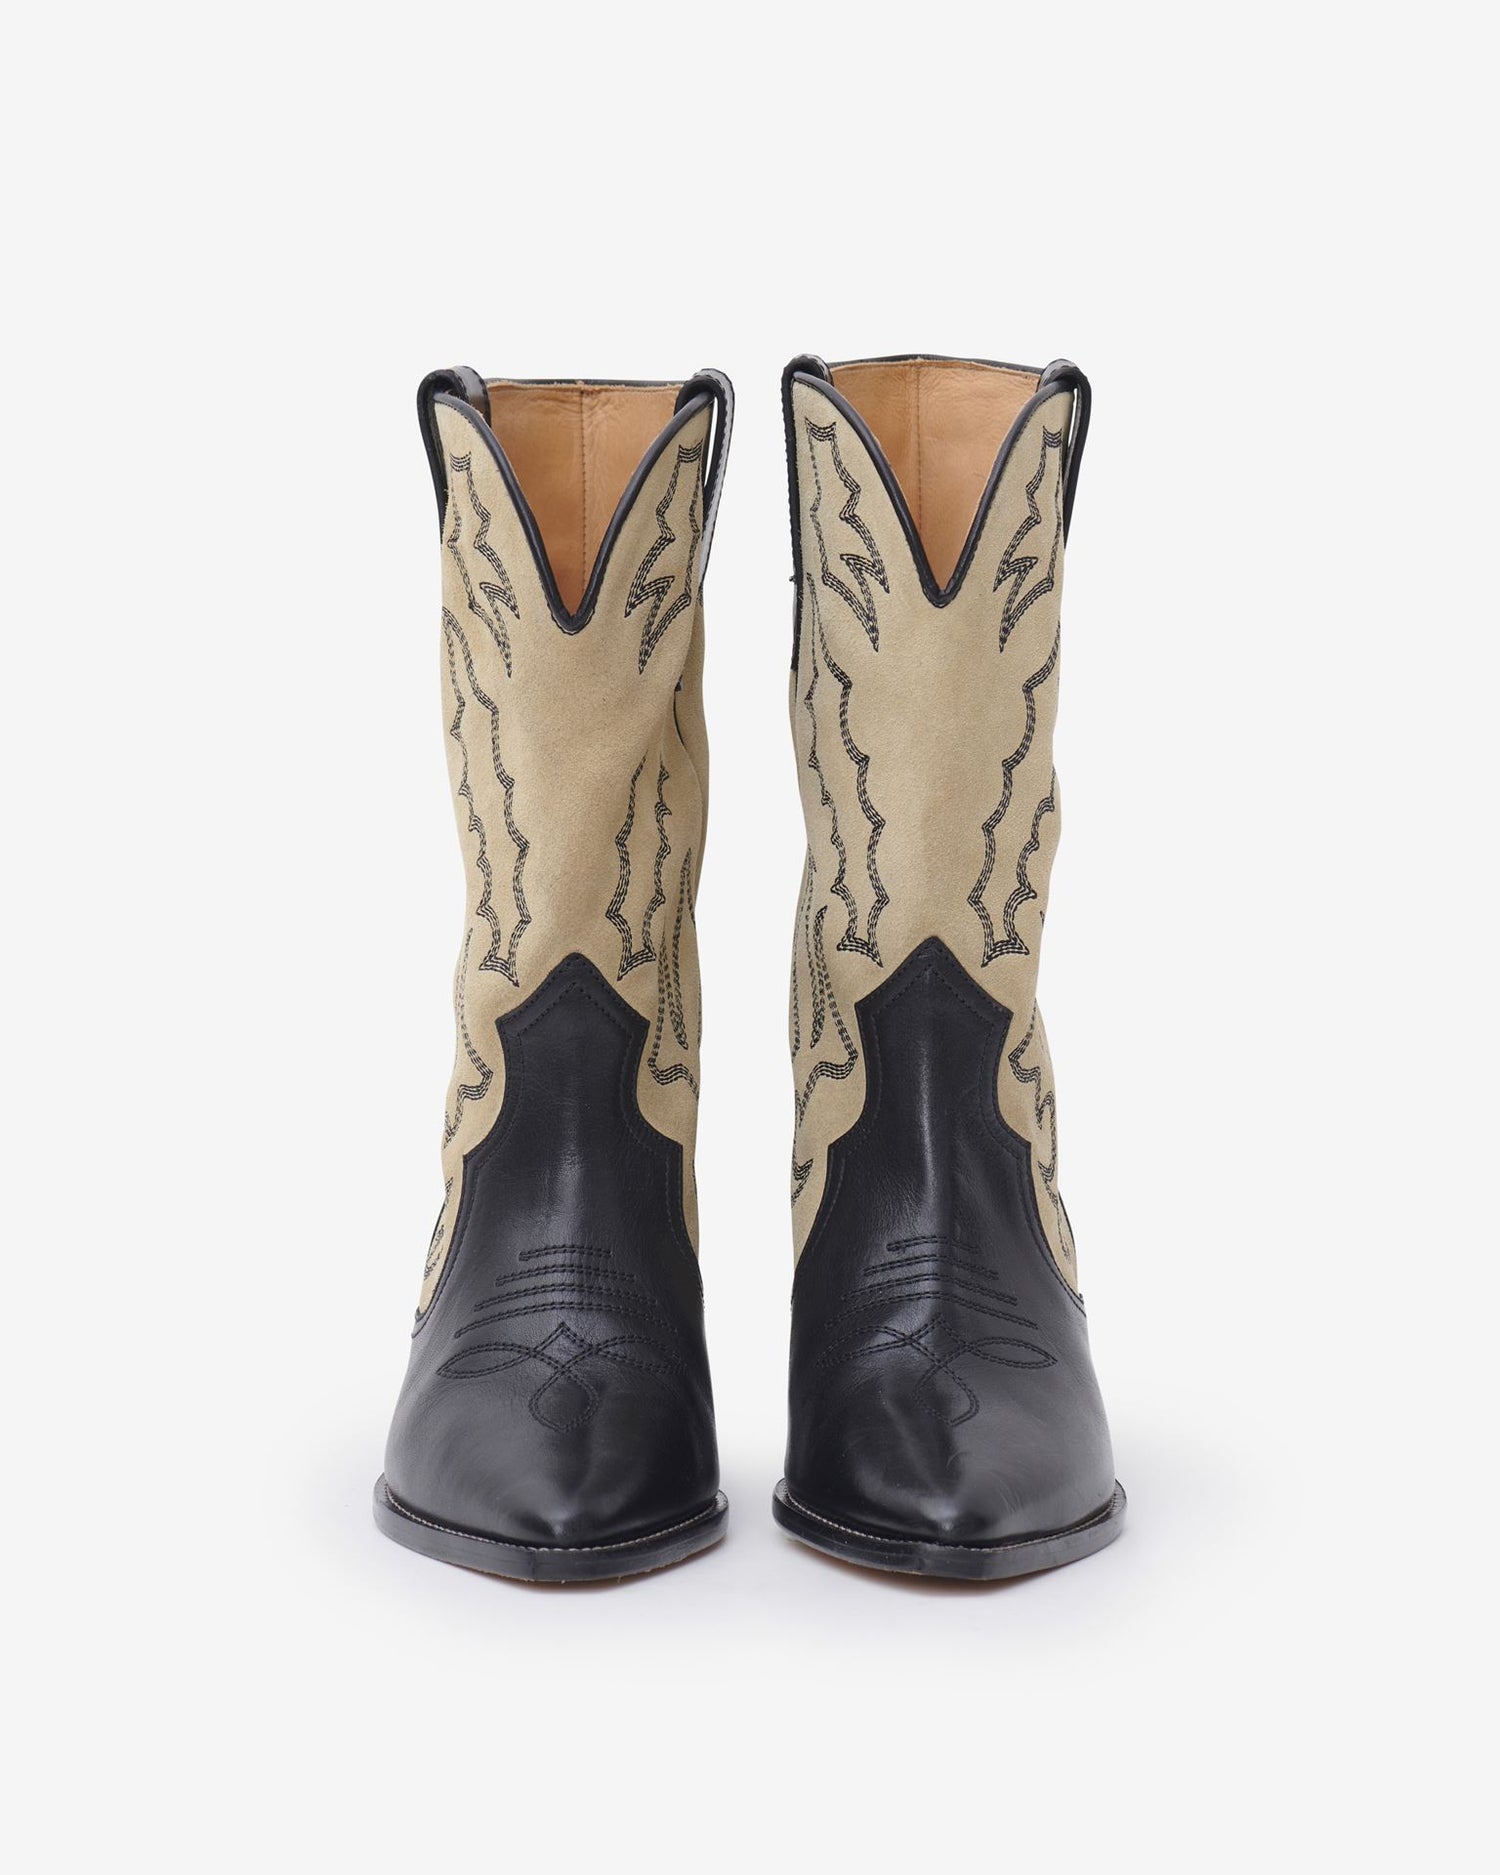 DUERTO cowboy boots, black/ecru